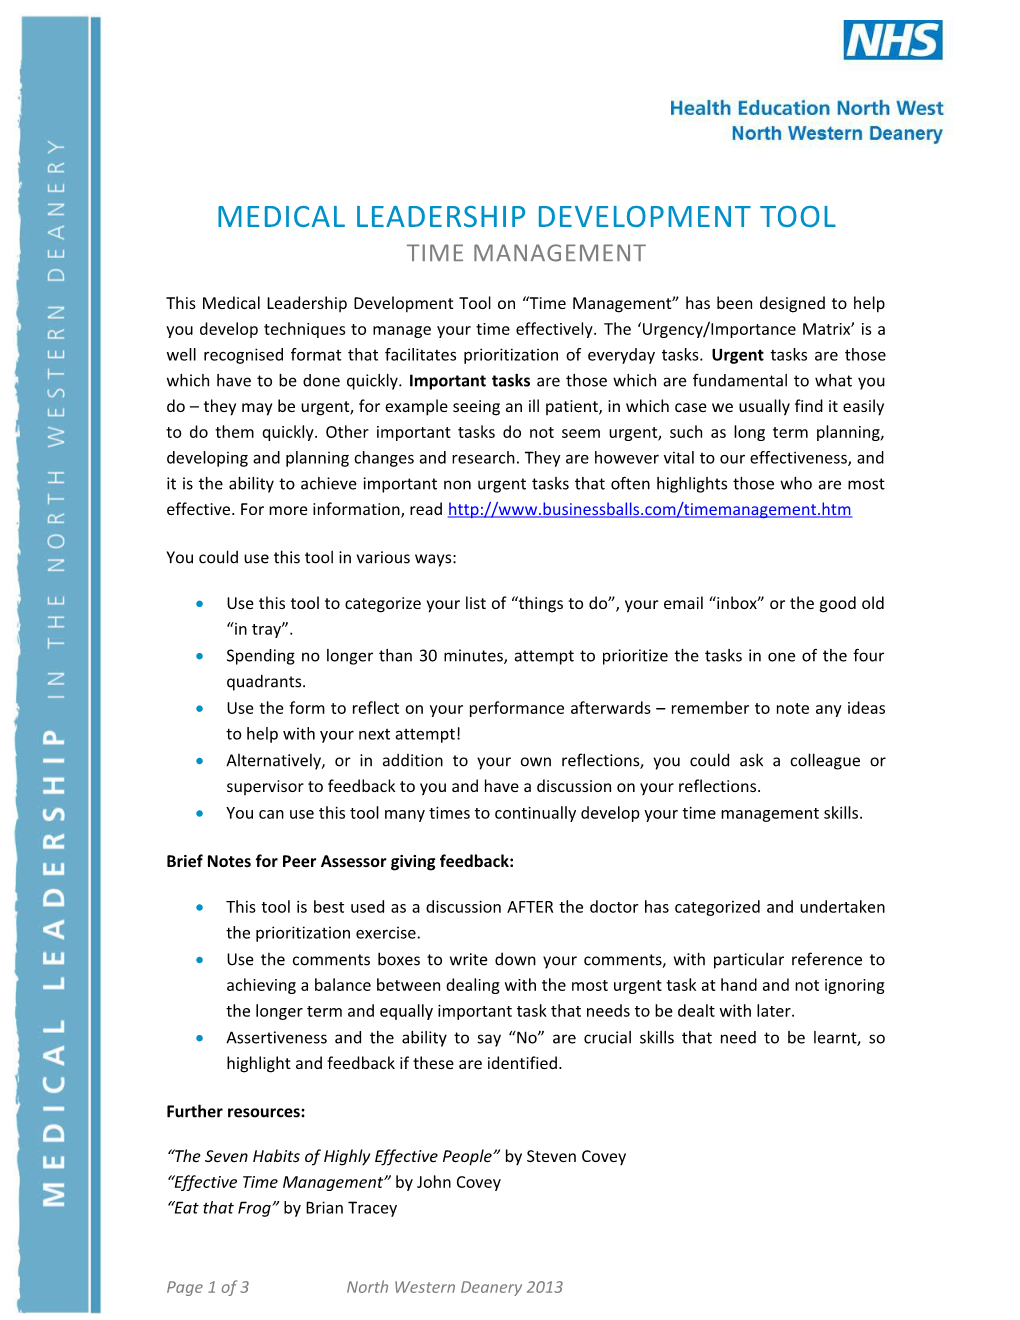 Medical Leadership Work Based Assesment